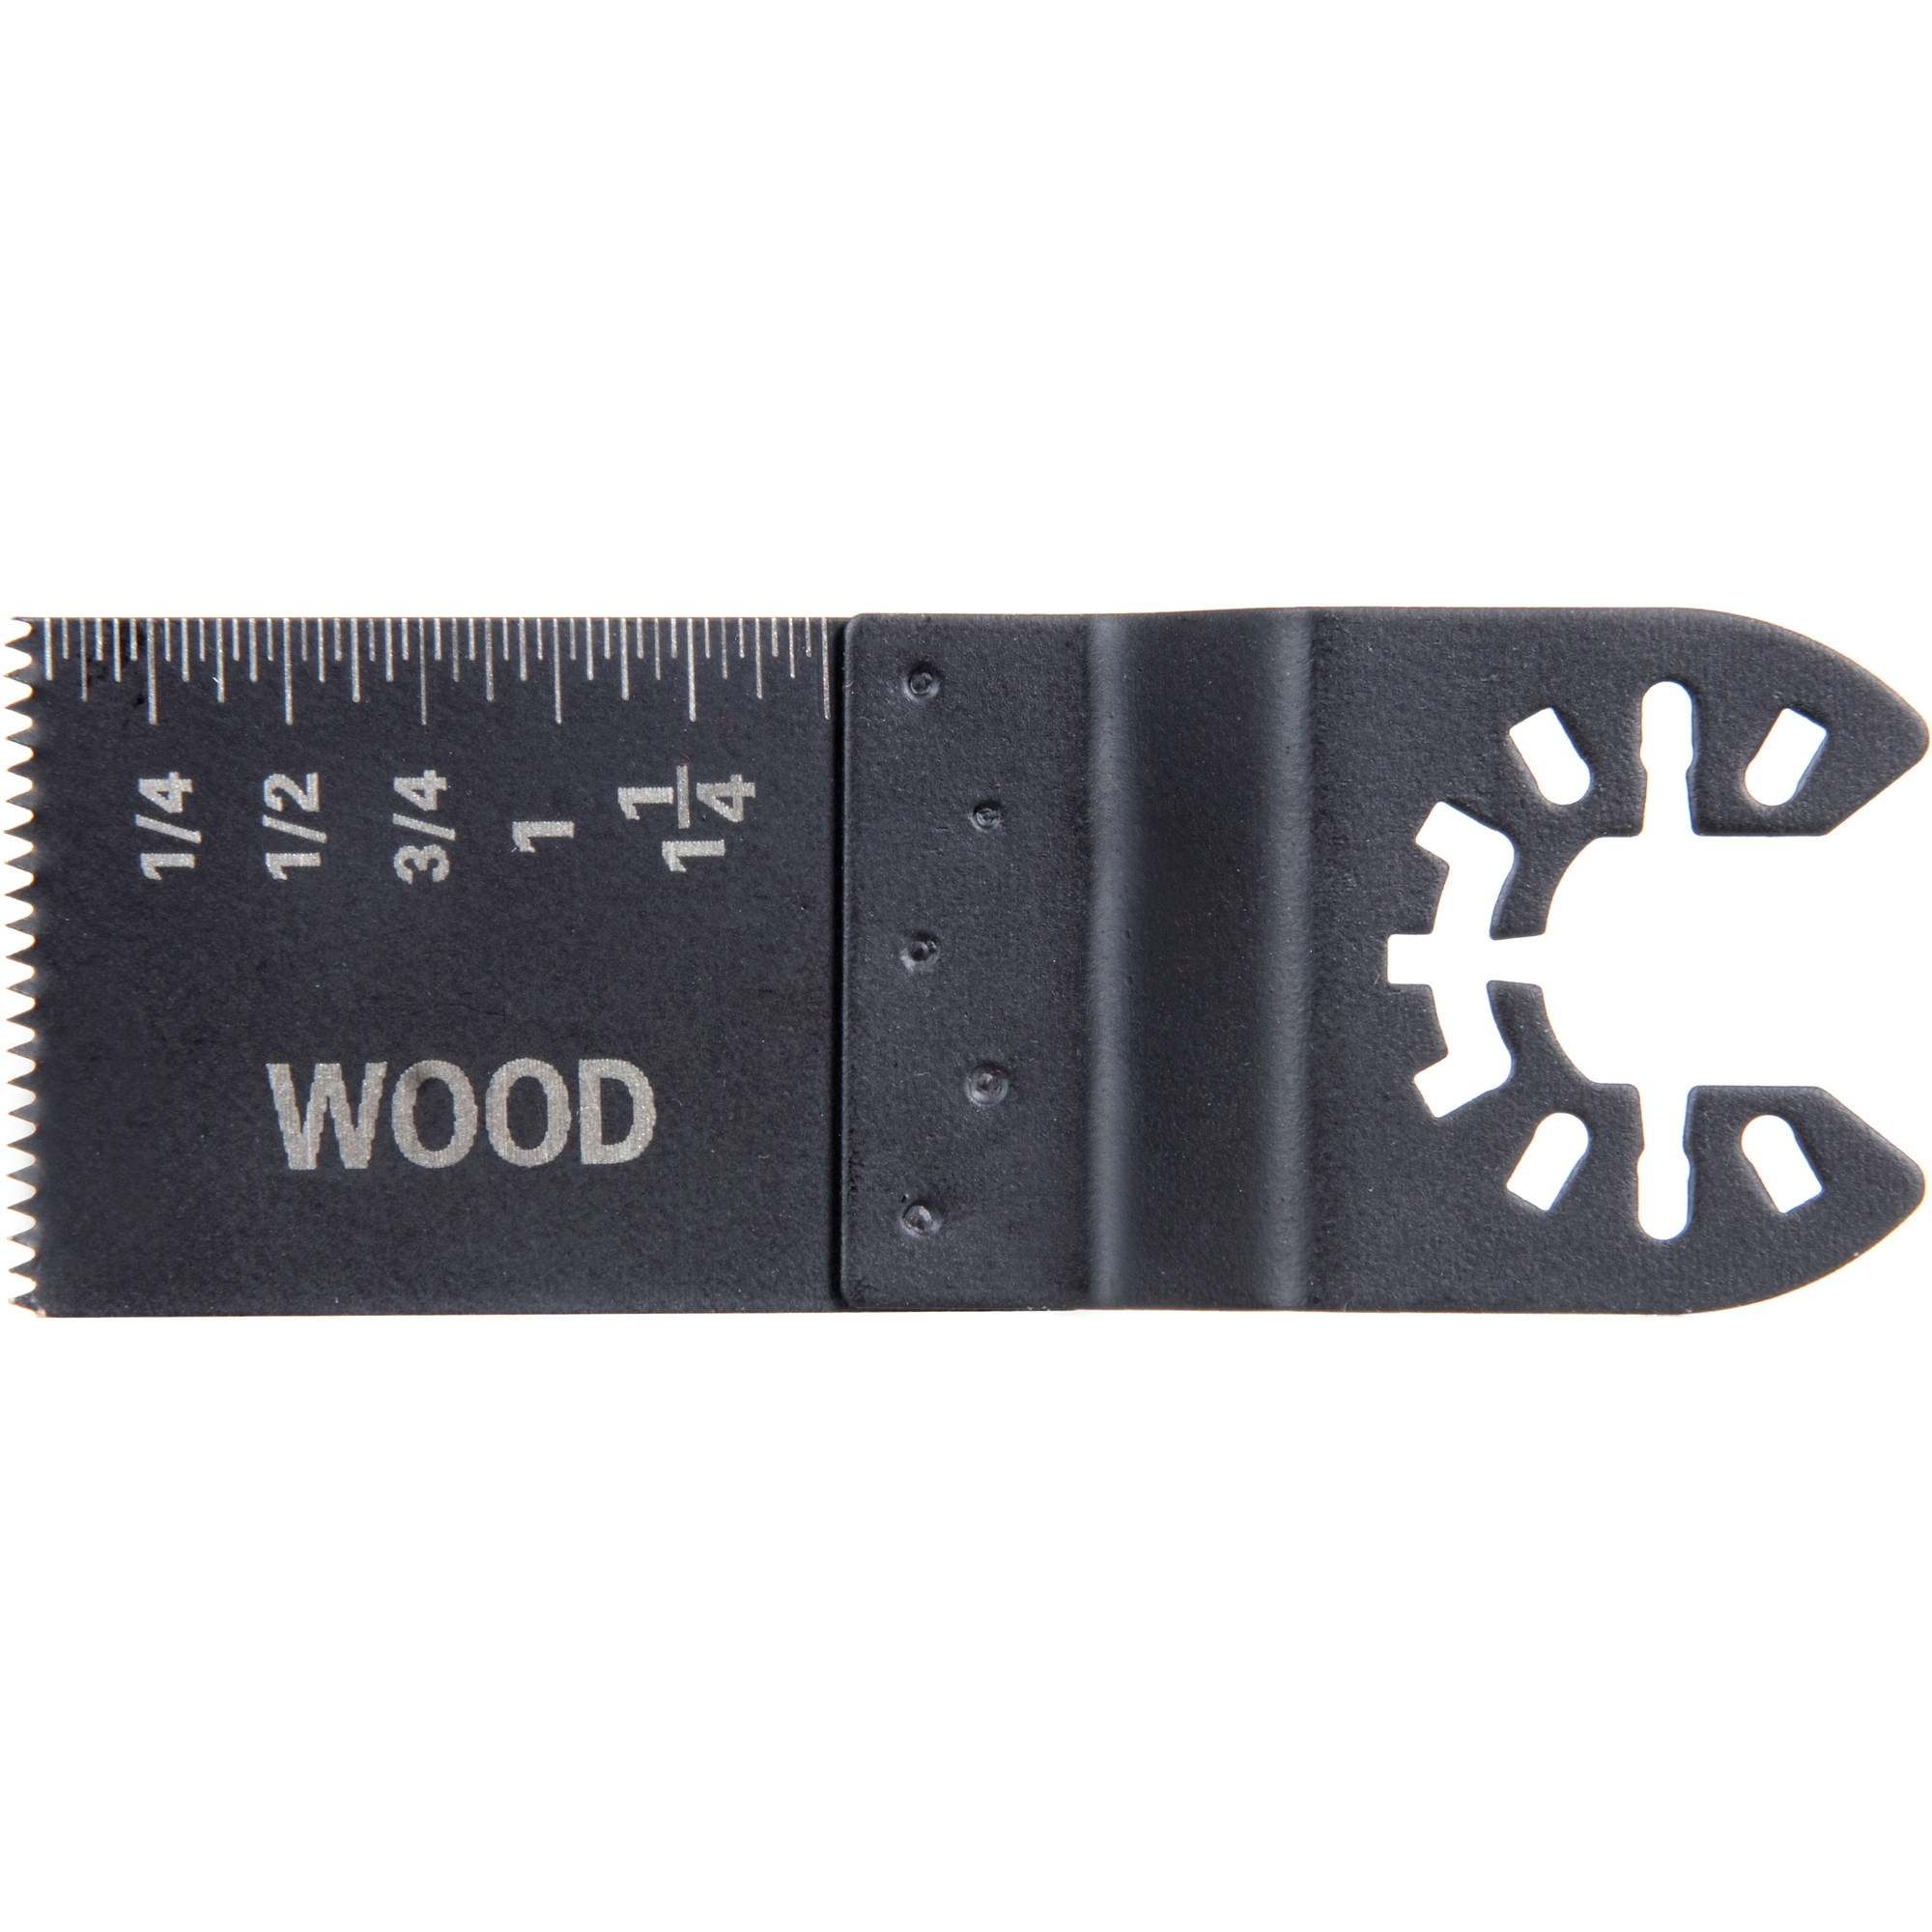 Hyper Tough 1-1/4 inch Wood End-cut Blade for Oscillating Tools AU60004N